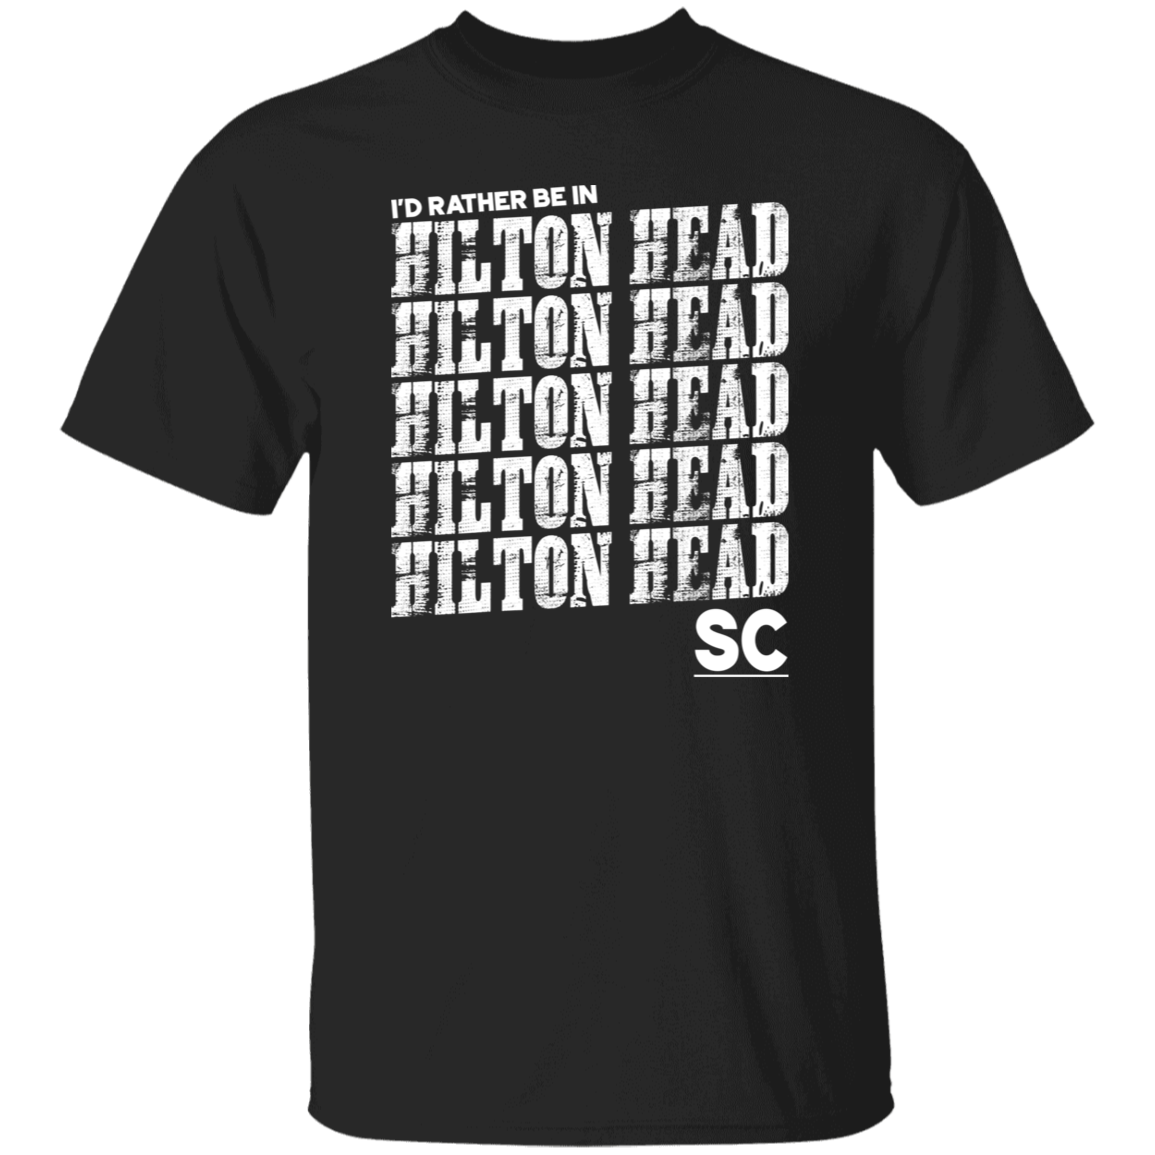 I'd Rather Be In Hilton Head SC White Print T-Shirt